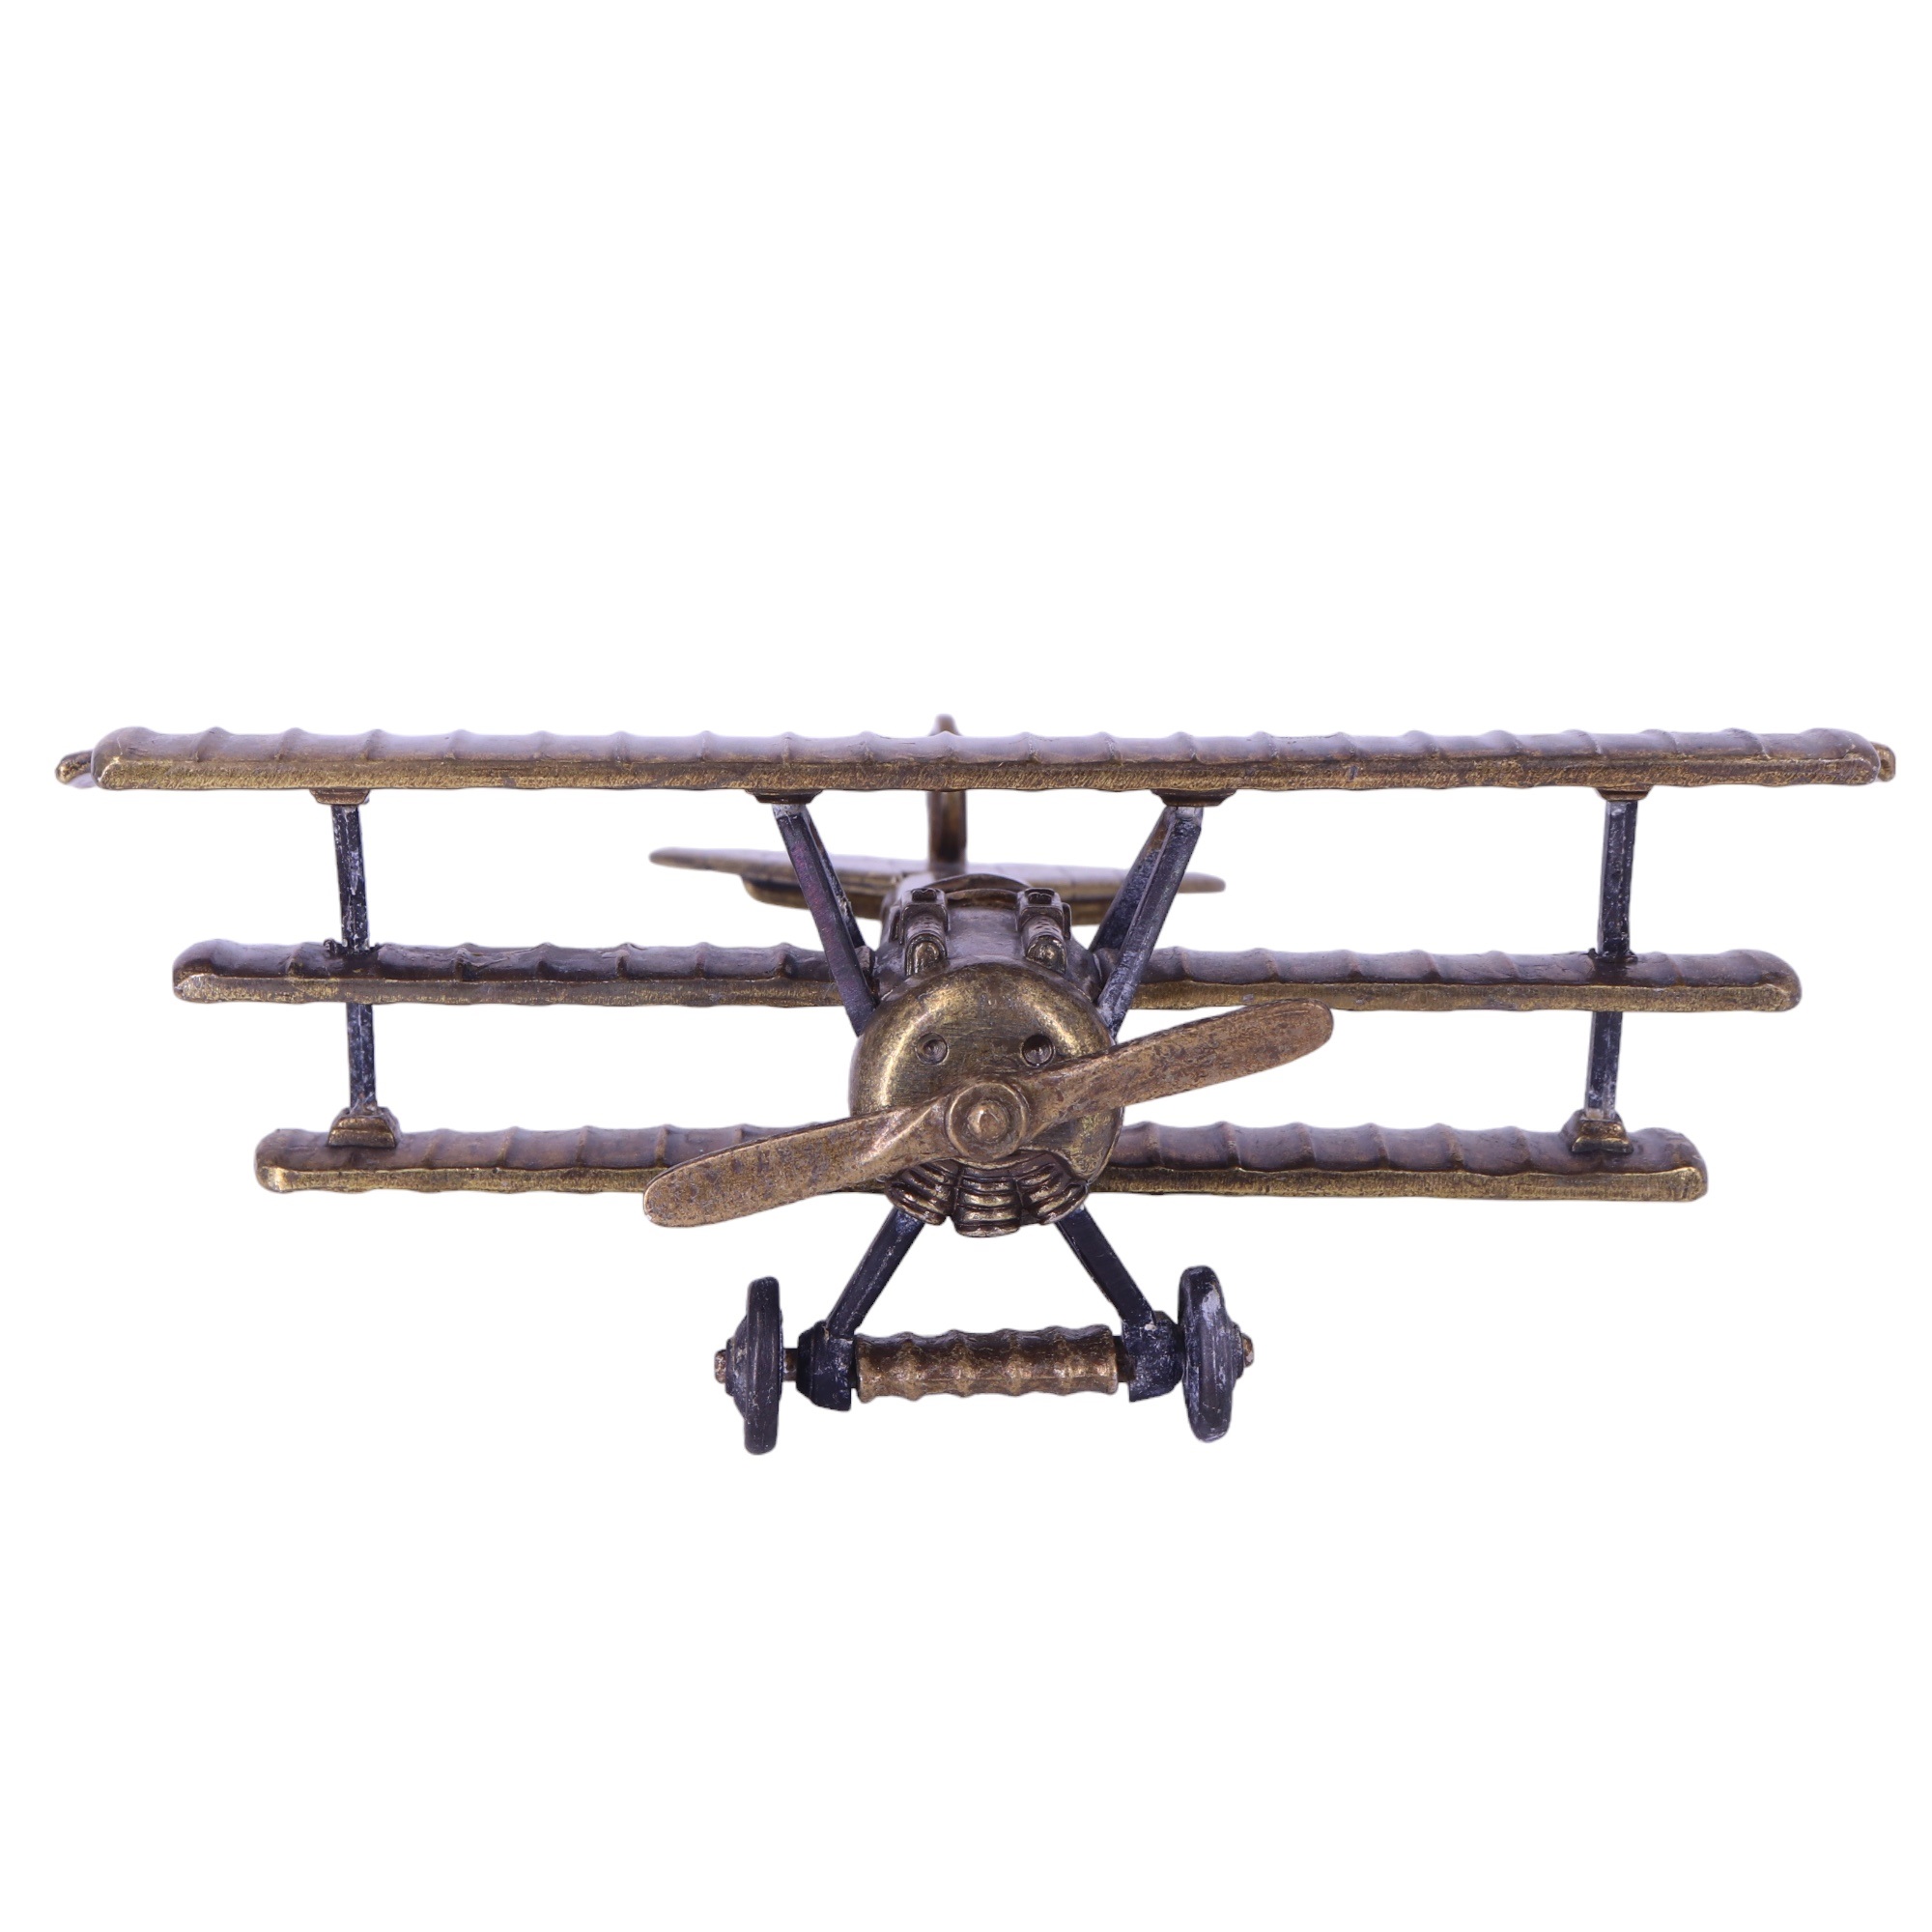 A cast metal model of a Great War German Dreidecker triplane by Ghedina, wingspan 19 cm - Image 2 of 6